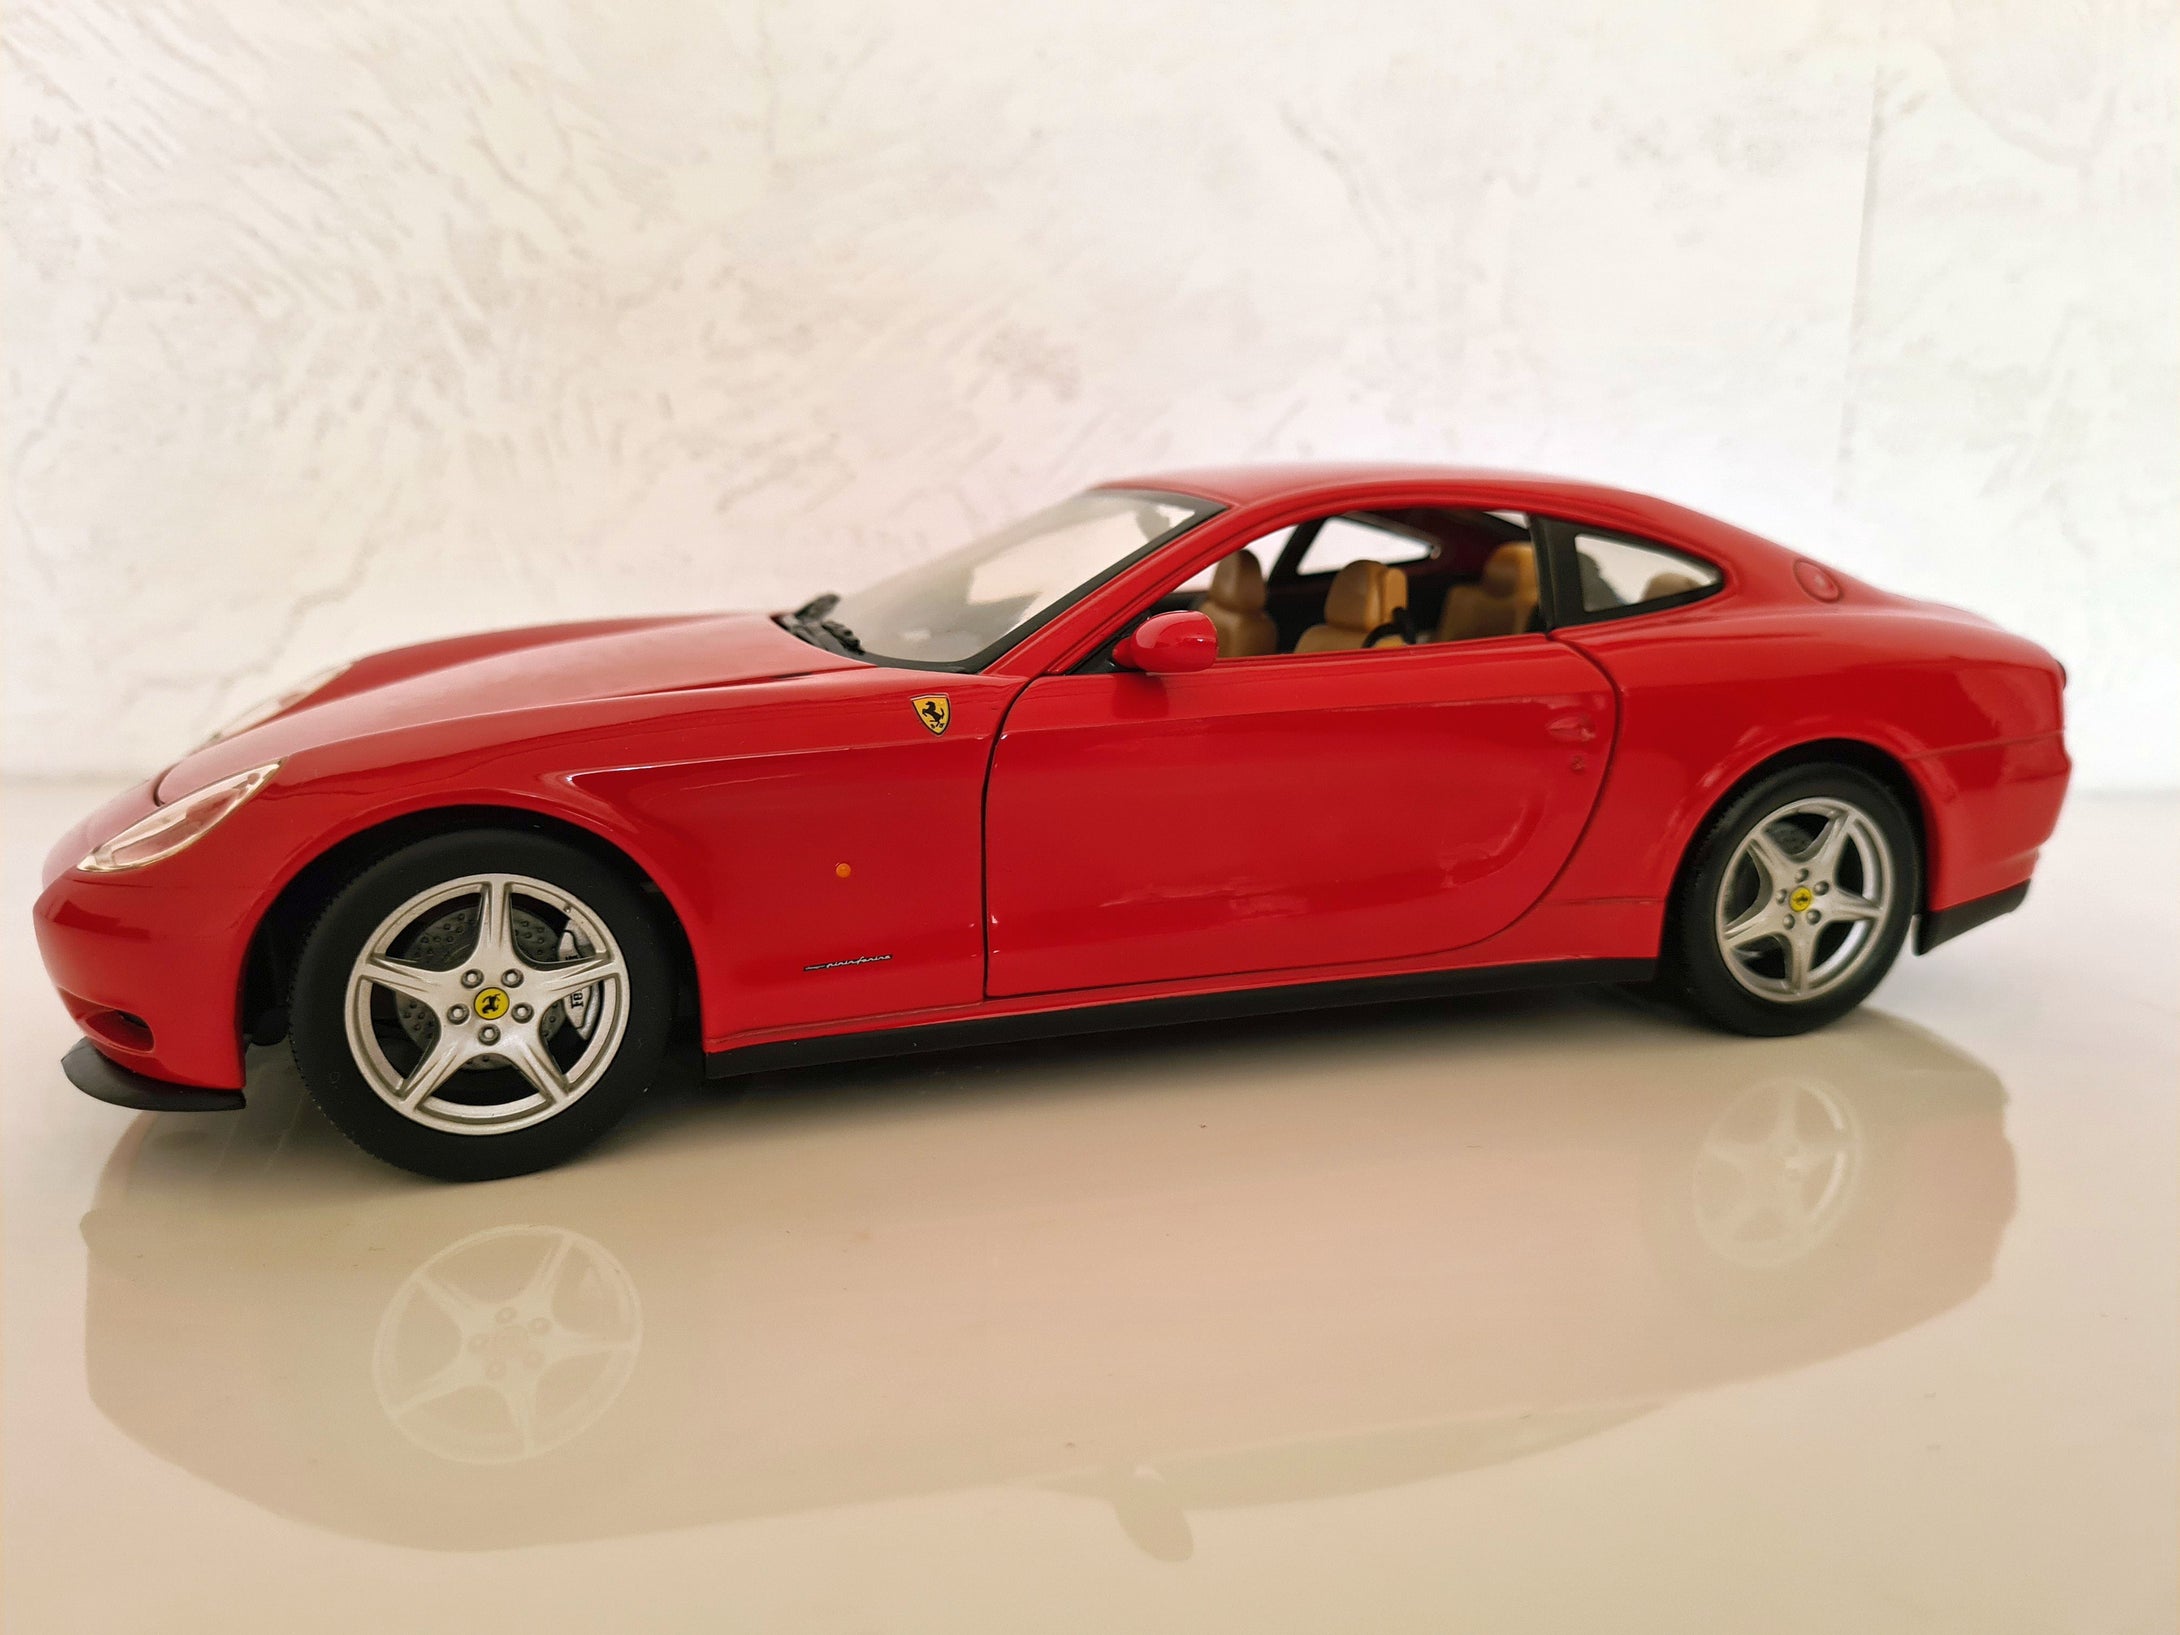 Hot Wheels/Mattel Ferrari F137 1:18